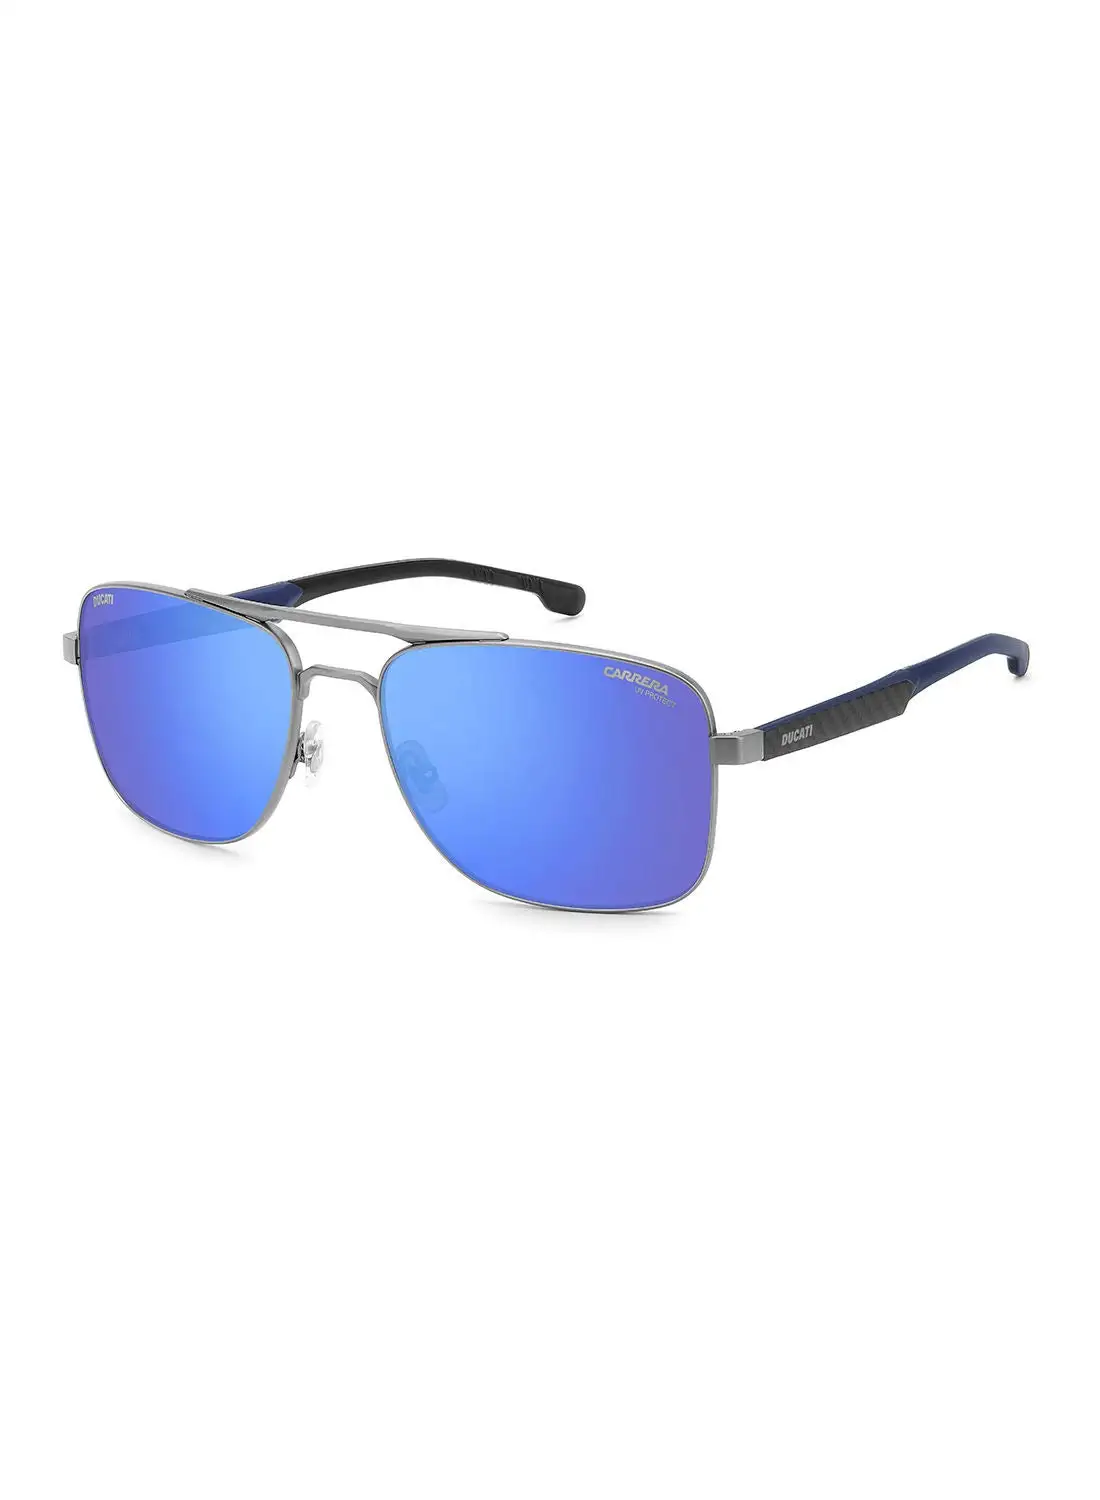 Carrera Men's UV Protection Sunglasses - Carduc 022/S Mtdkrutbl 60 - Lens Size: 60 Mm